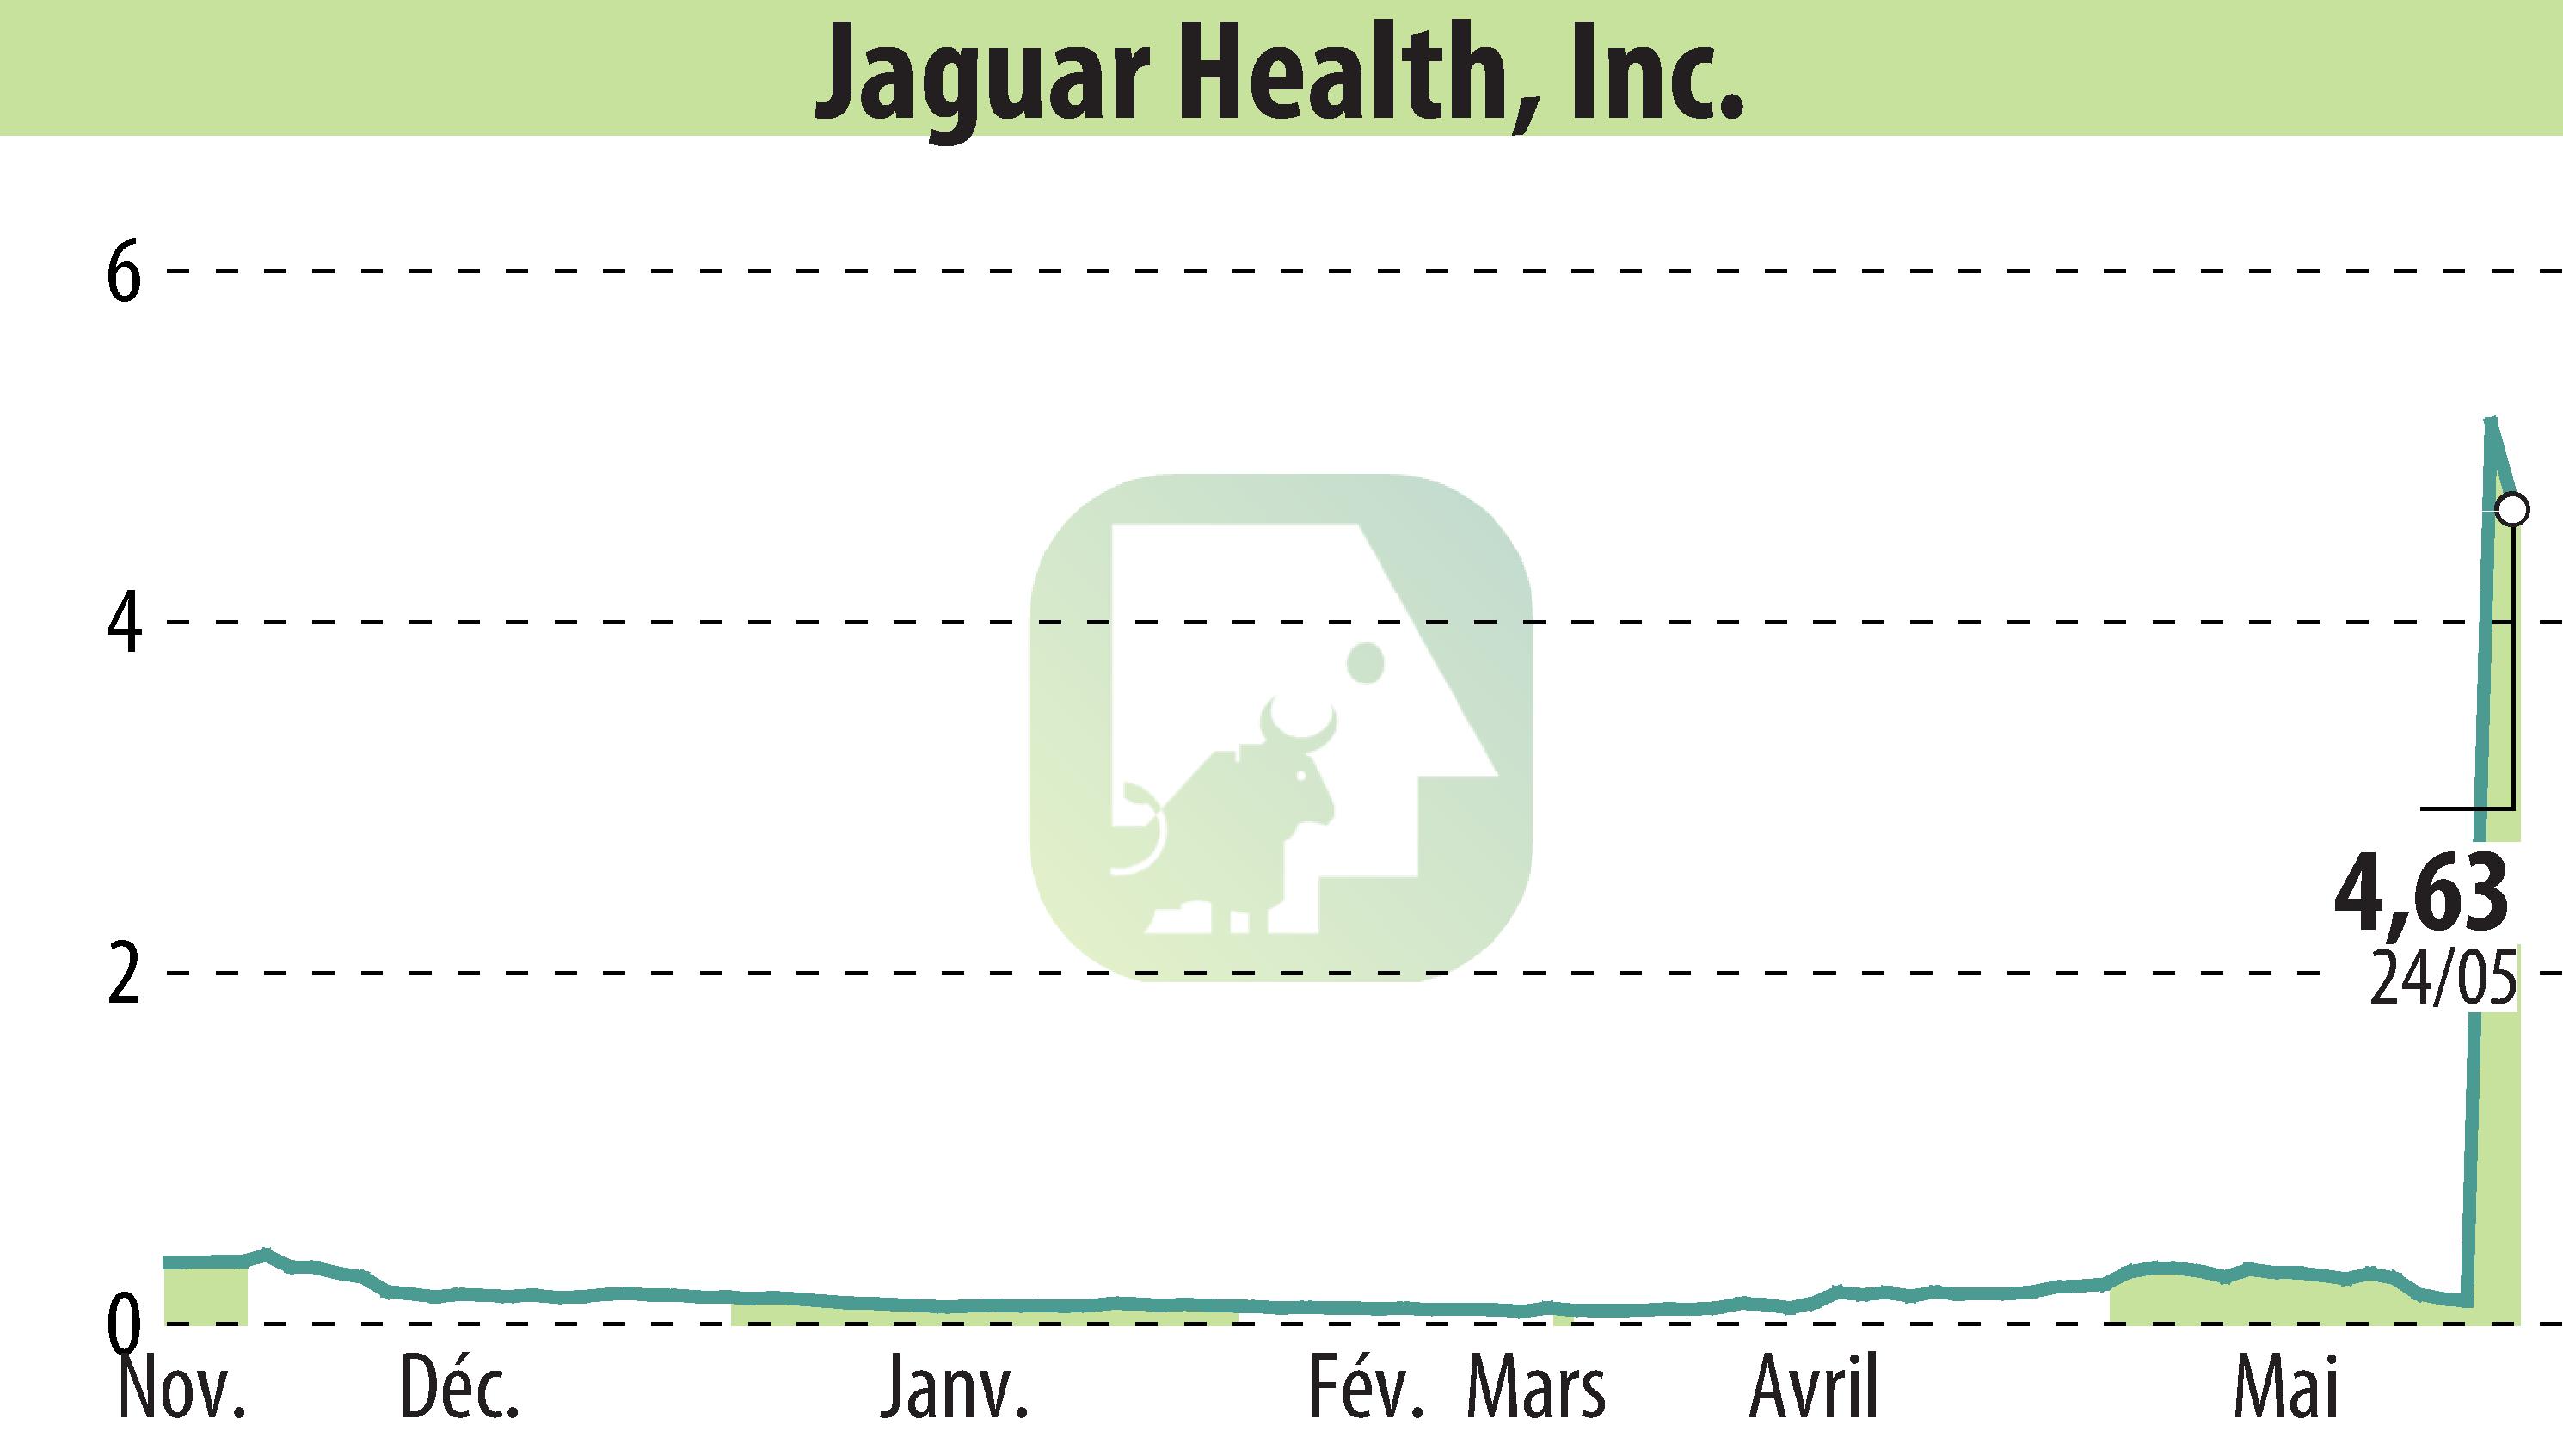 Stock price chart of Jaguar Health, Inc. (EBR:JAGX) showing fluctuations.